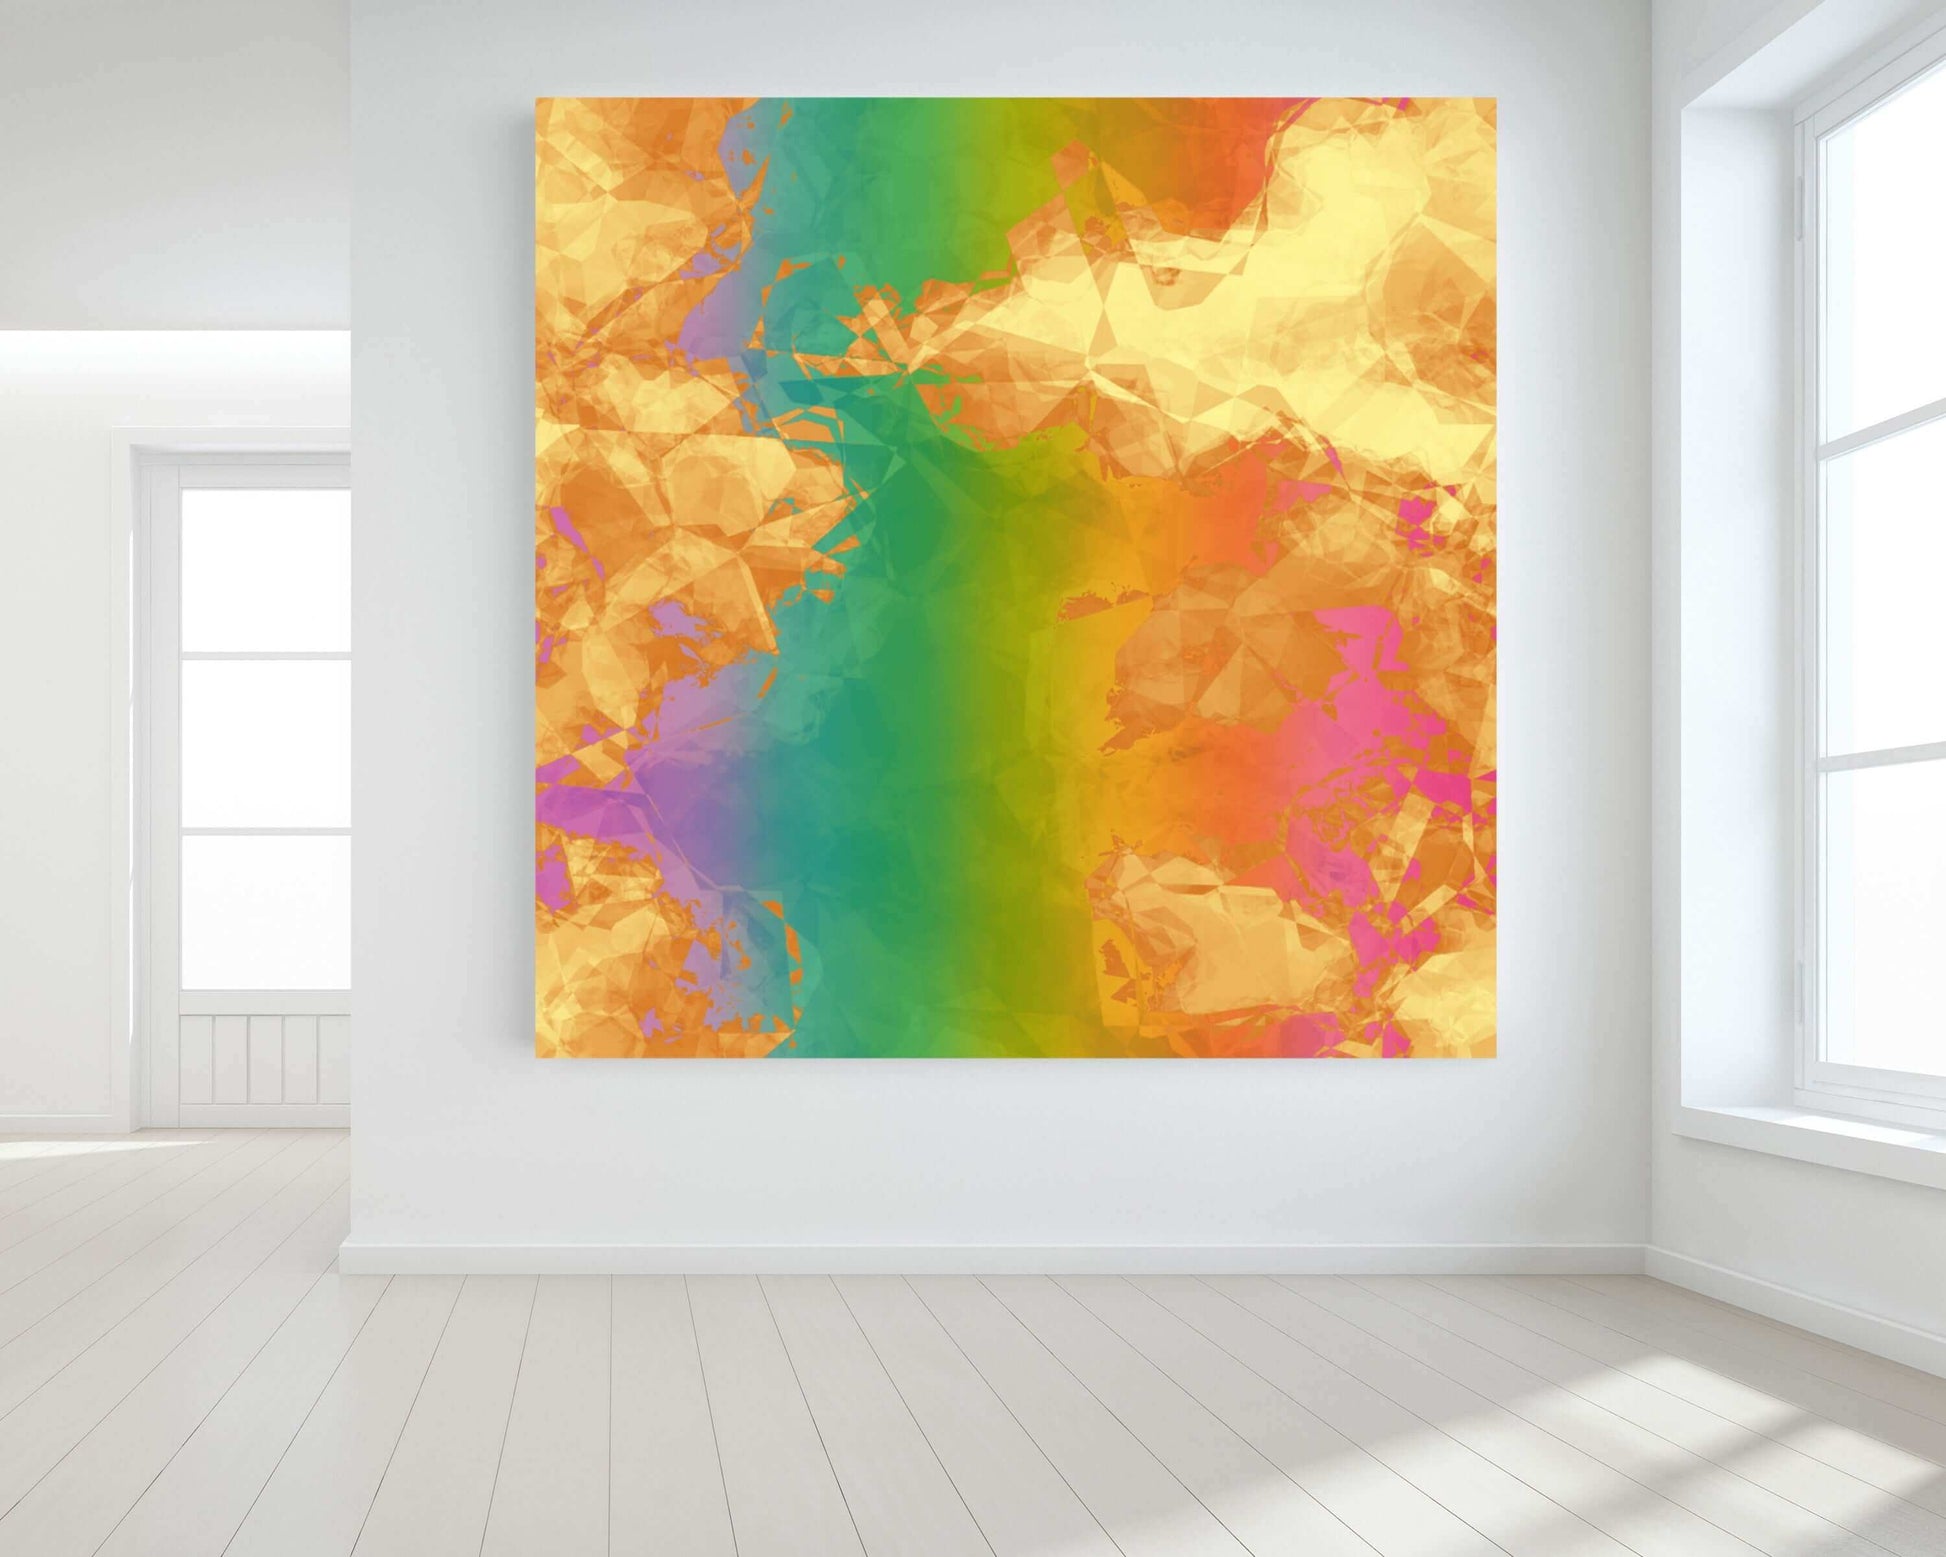 Fiery Rainbow “Rainbow Geode” Abstract Art Canvas Print Wall Art Large Canvas on Wall